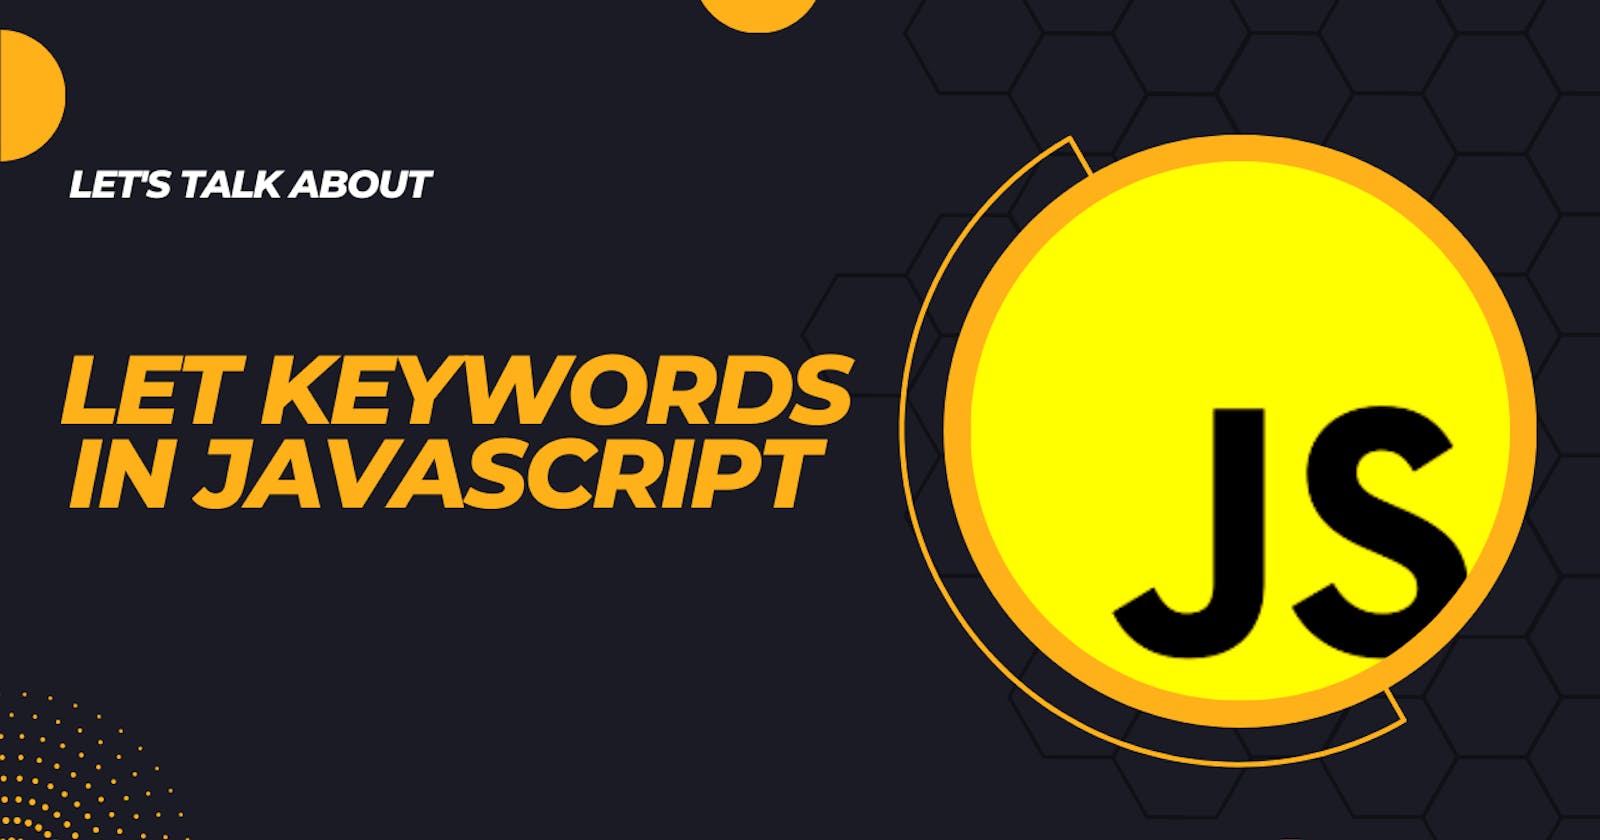 let's talk about let keywords in javascript